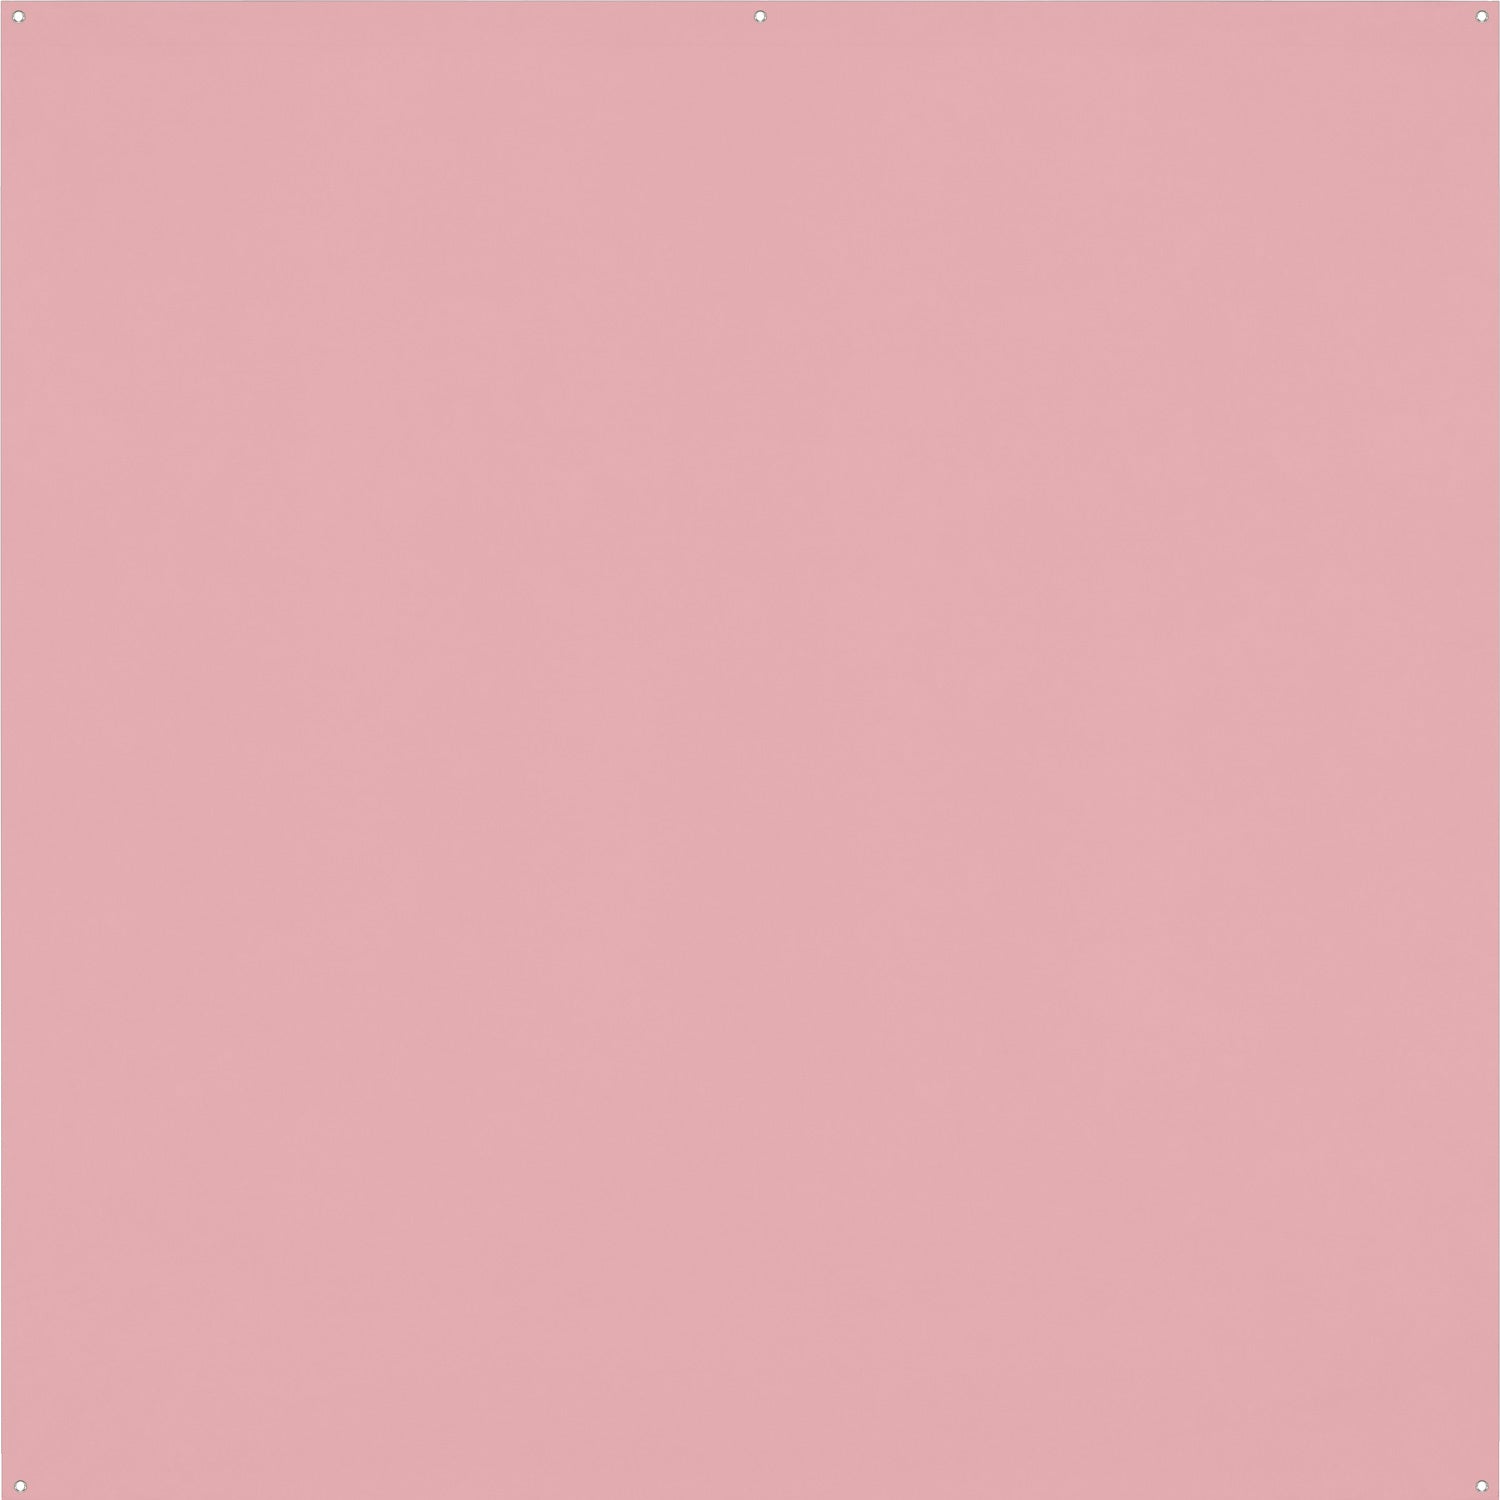 X-Drop Pro Wrinkle-Resistant Backdrop - Blush Pink (8' x 8')